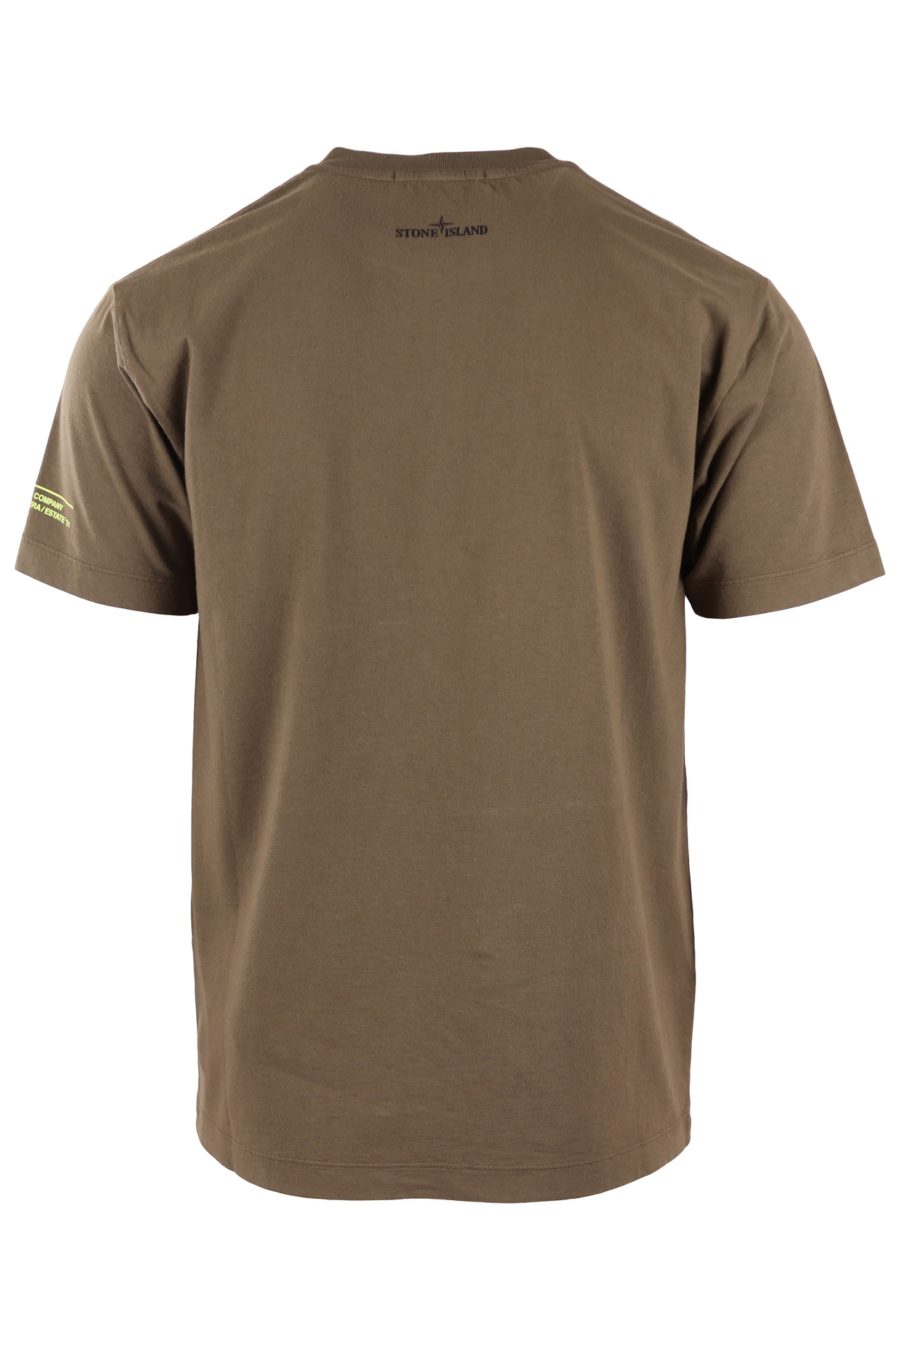 Camiseta Stone Island verde militar con logo estampado - b68317dc8c648ea88ca5c2c26d824a7788e8d956